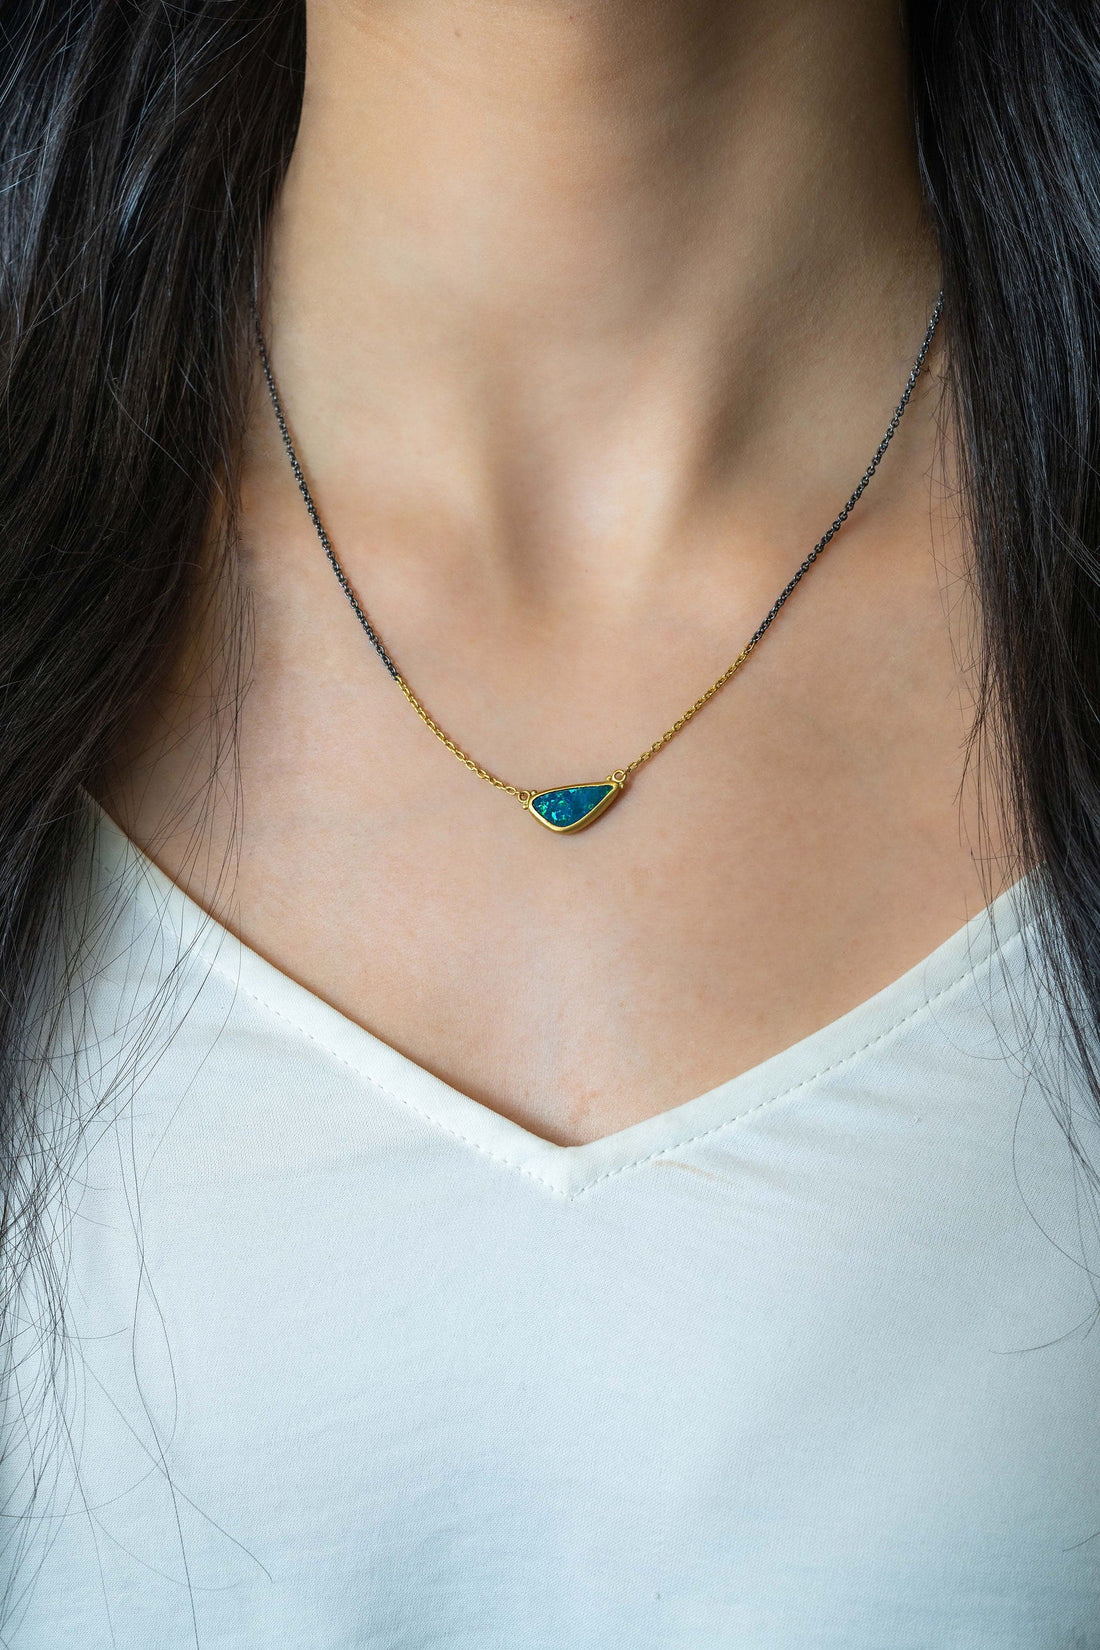 Lika Behar Ocean Opal Doublet Pendant Necklace